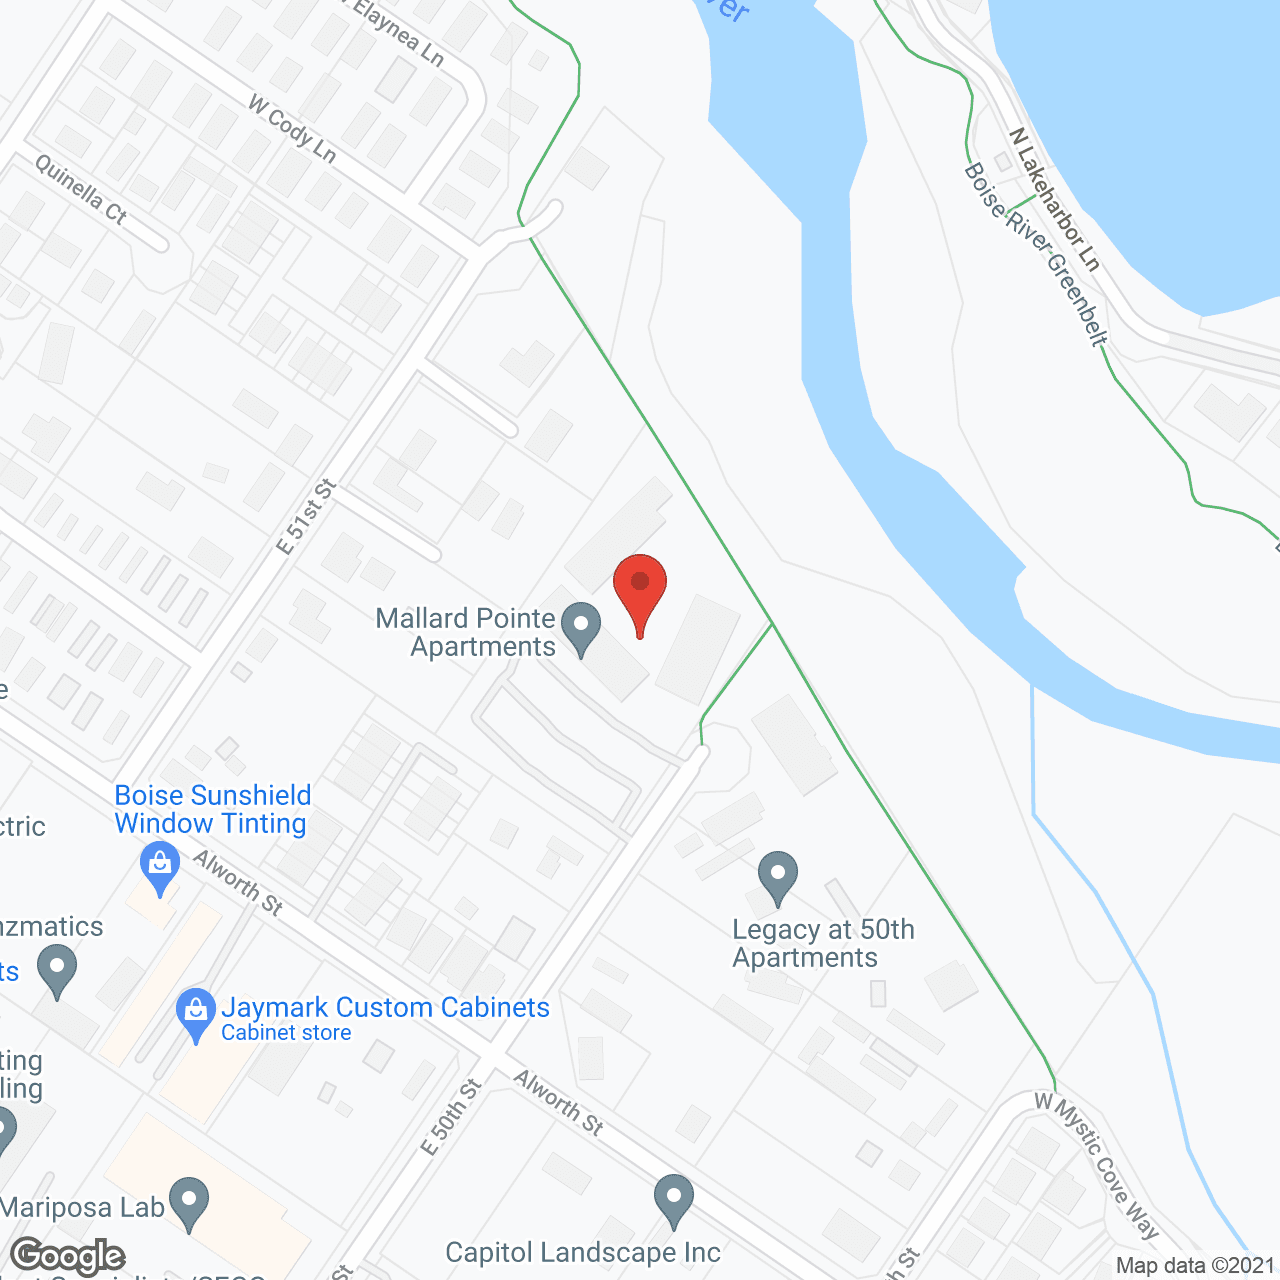 Mallard Pointe in google map